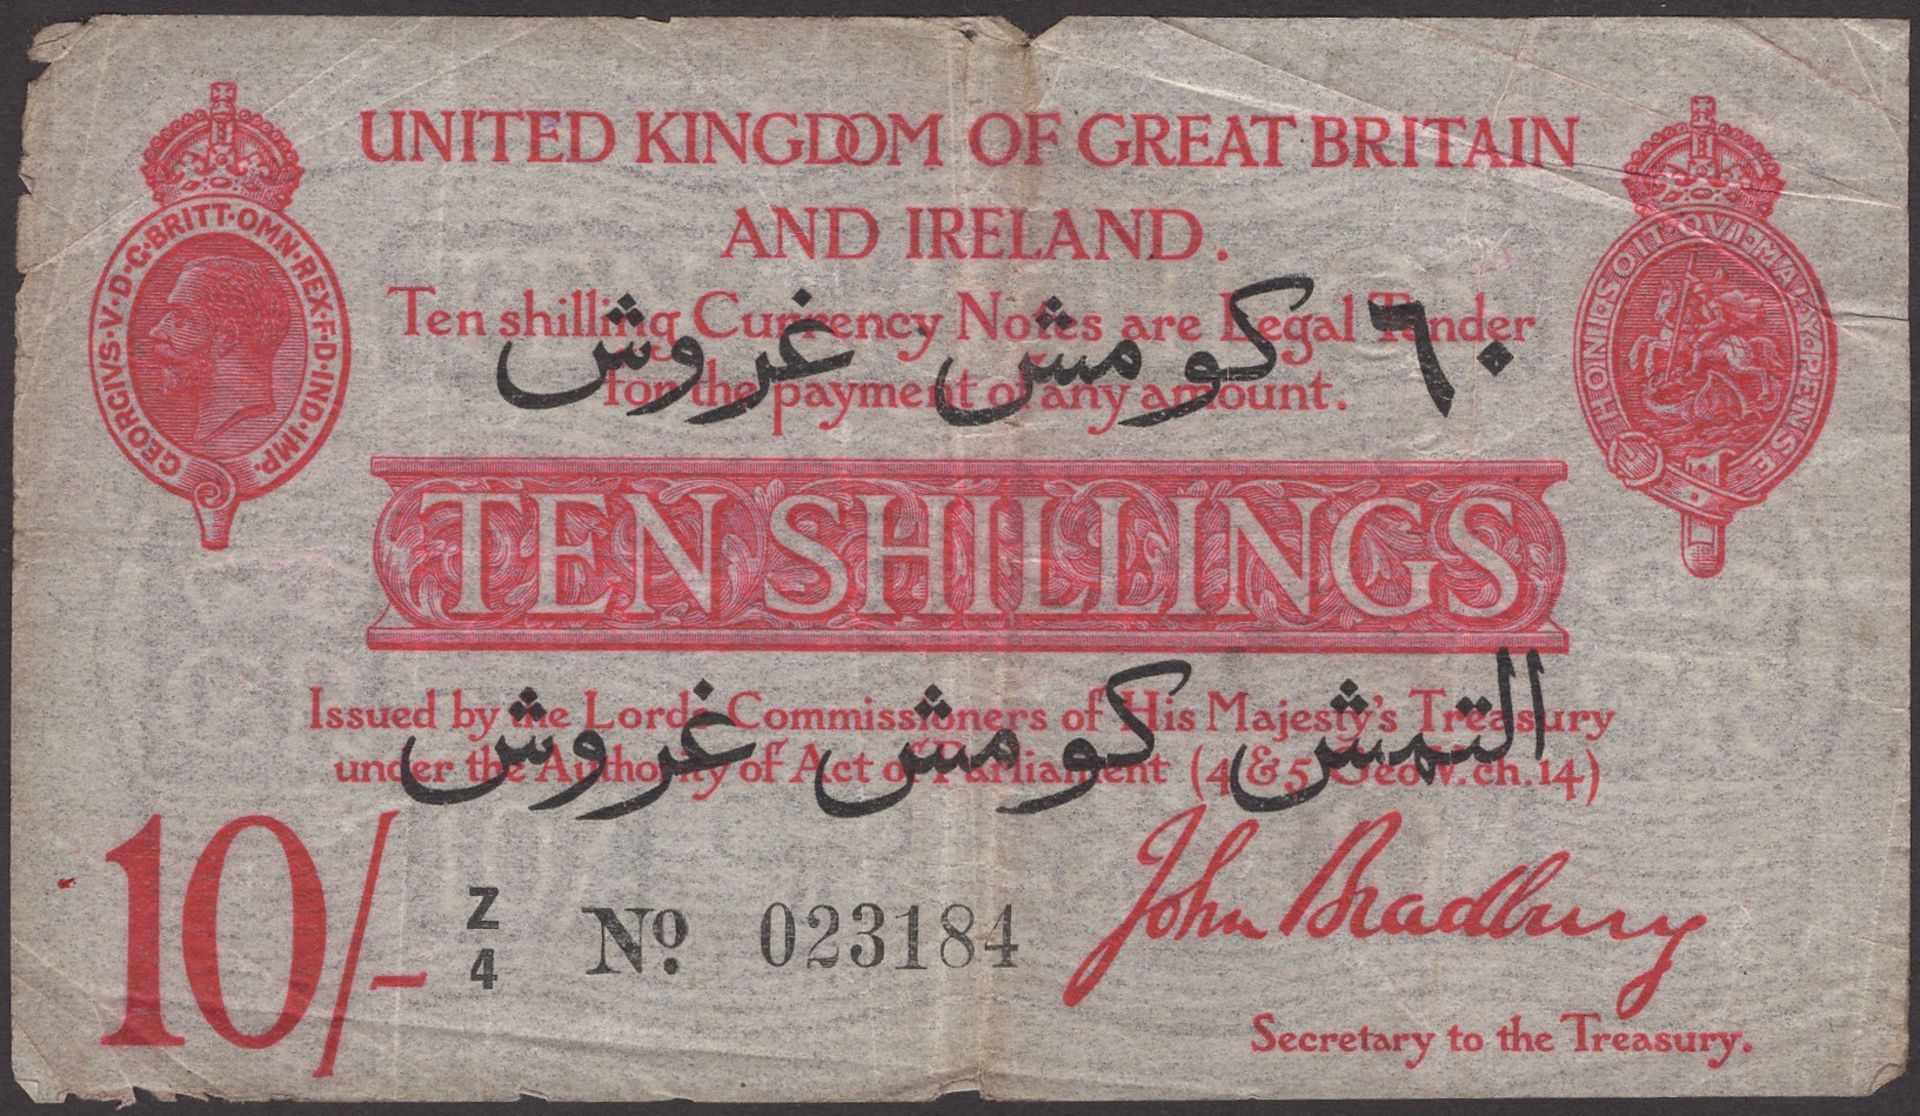 Treasury Series, John Bradbury, Dardanelles Campaign Overprint, 10 Shillings, 1915-16, seria...